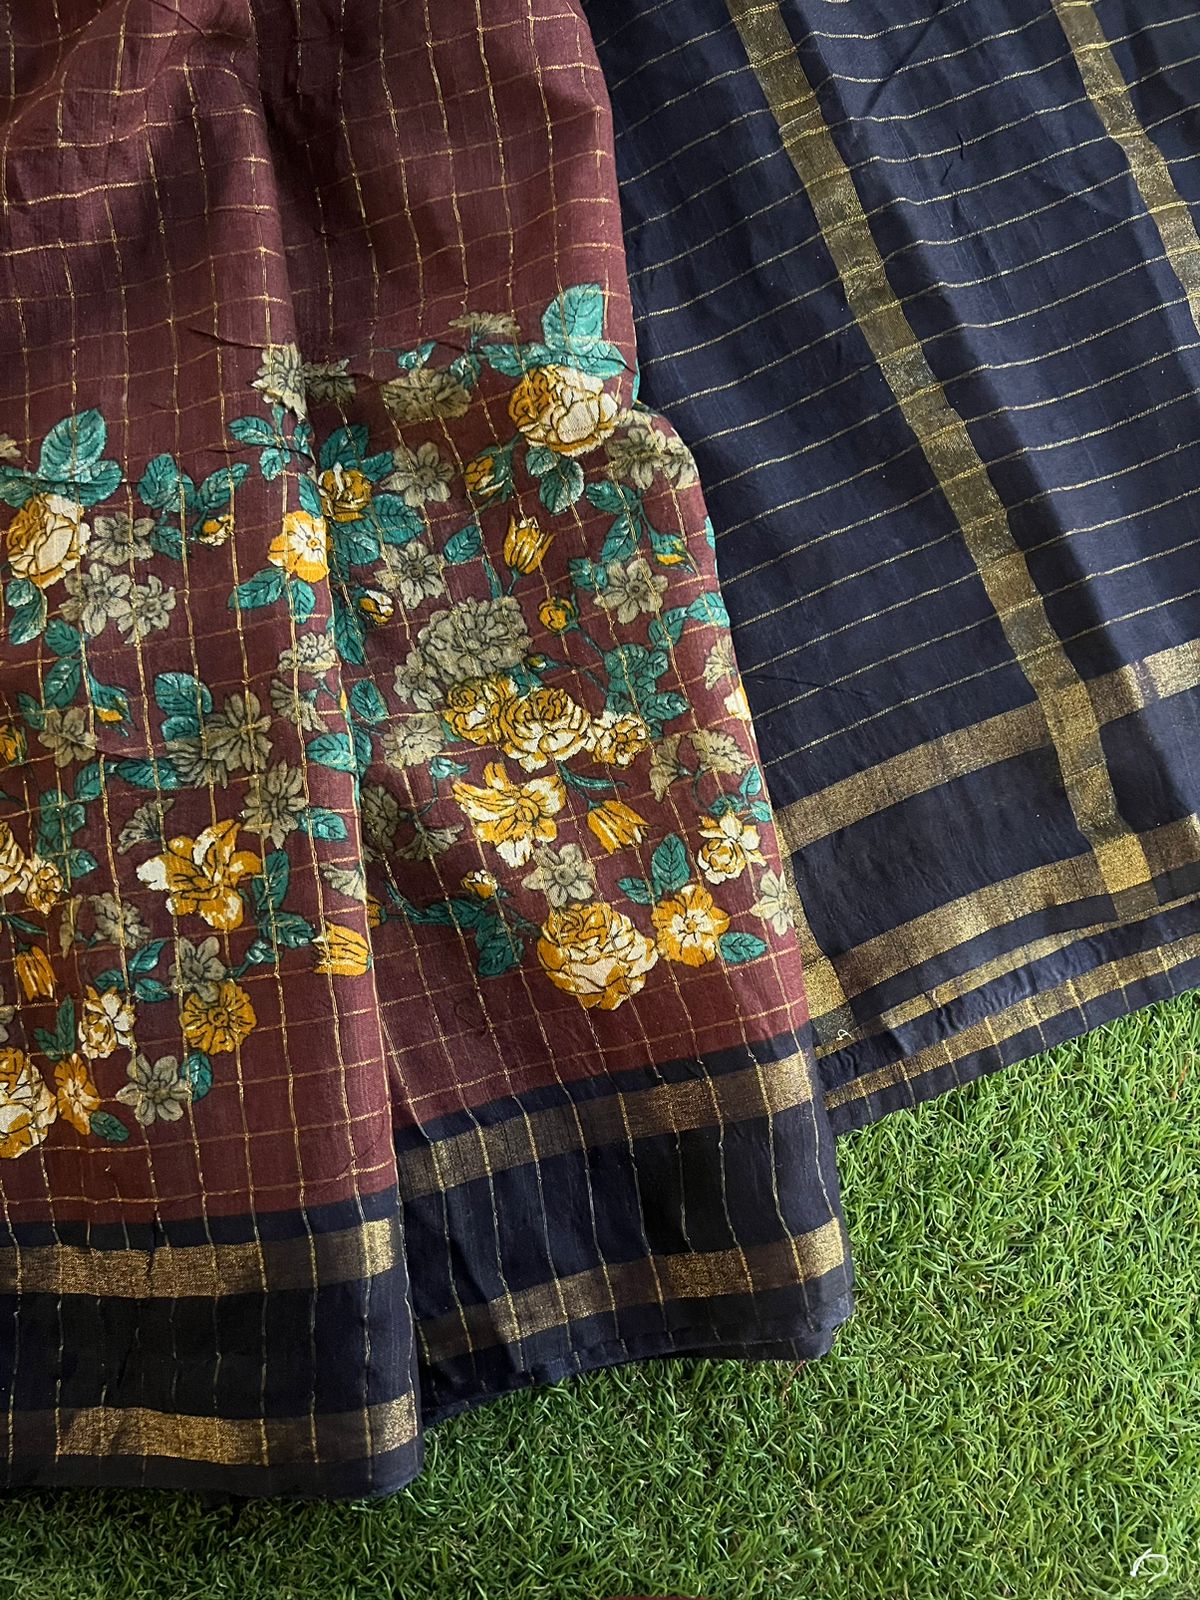 Handwoven zari checks bhagalpur tussar cotton saree